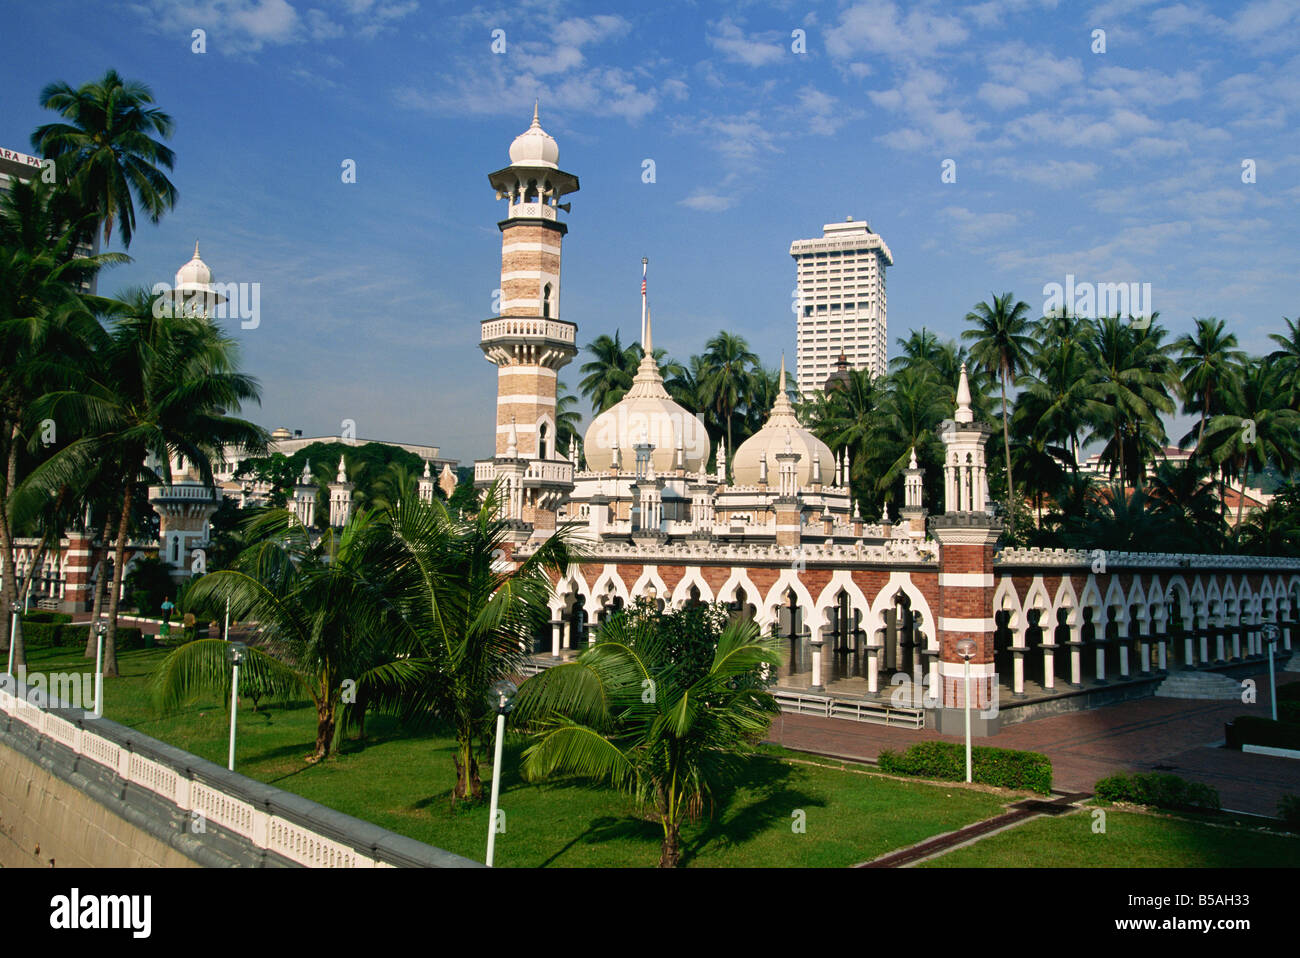 The Masjid Jamek (Friday Mosque), built in 1907, Kuala Lumpur, Malaysia, Southeast Asia Stock Photo